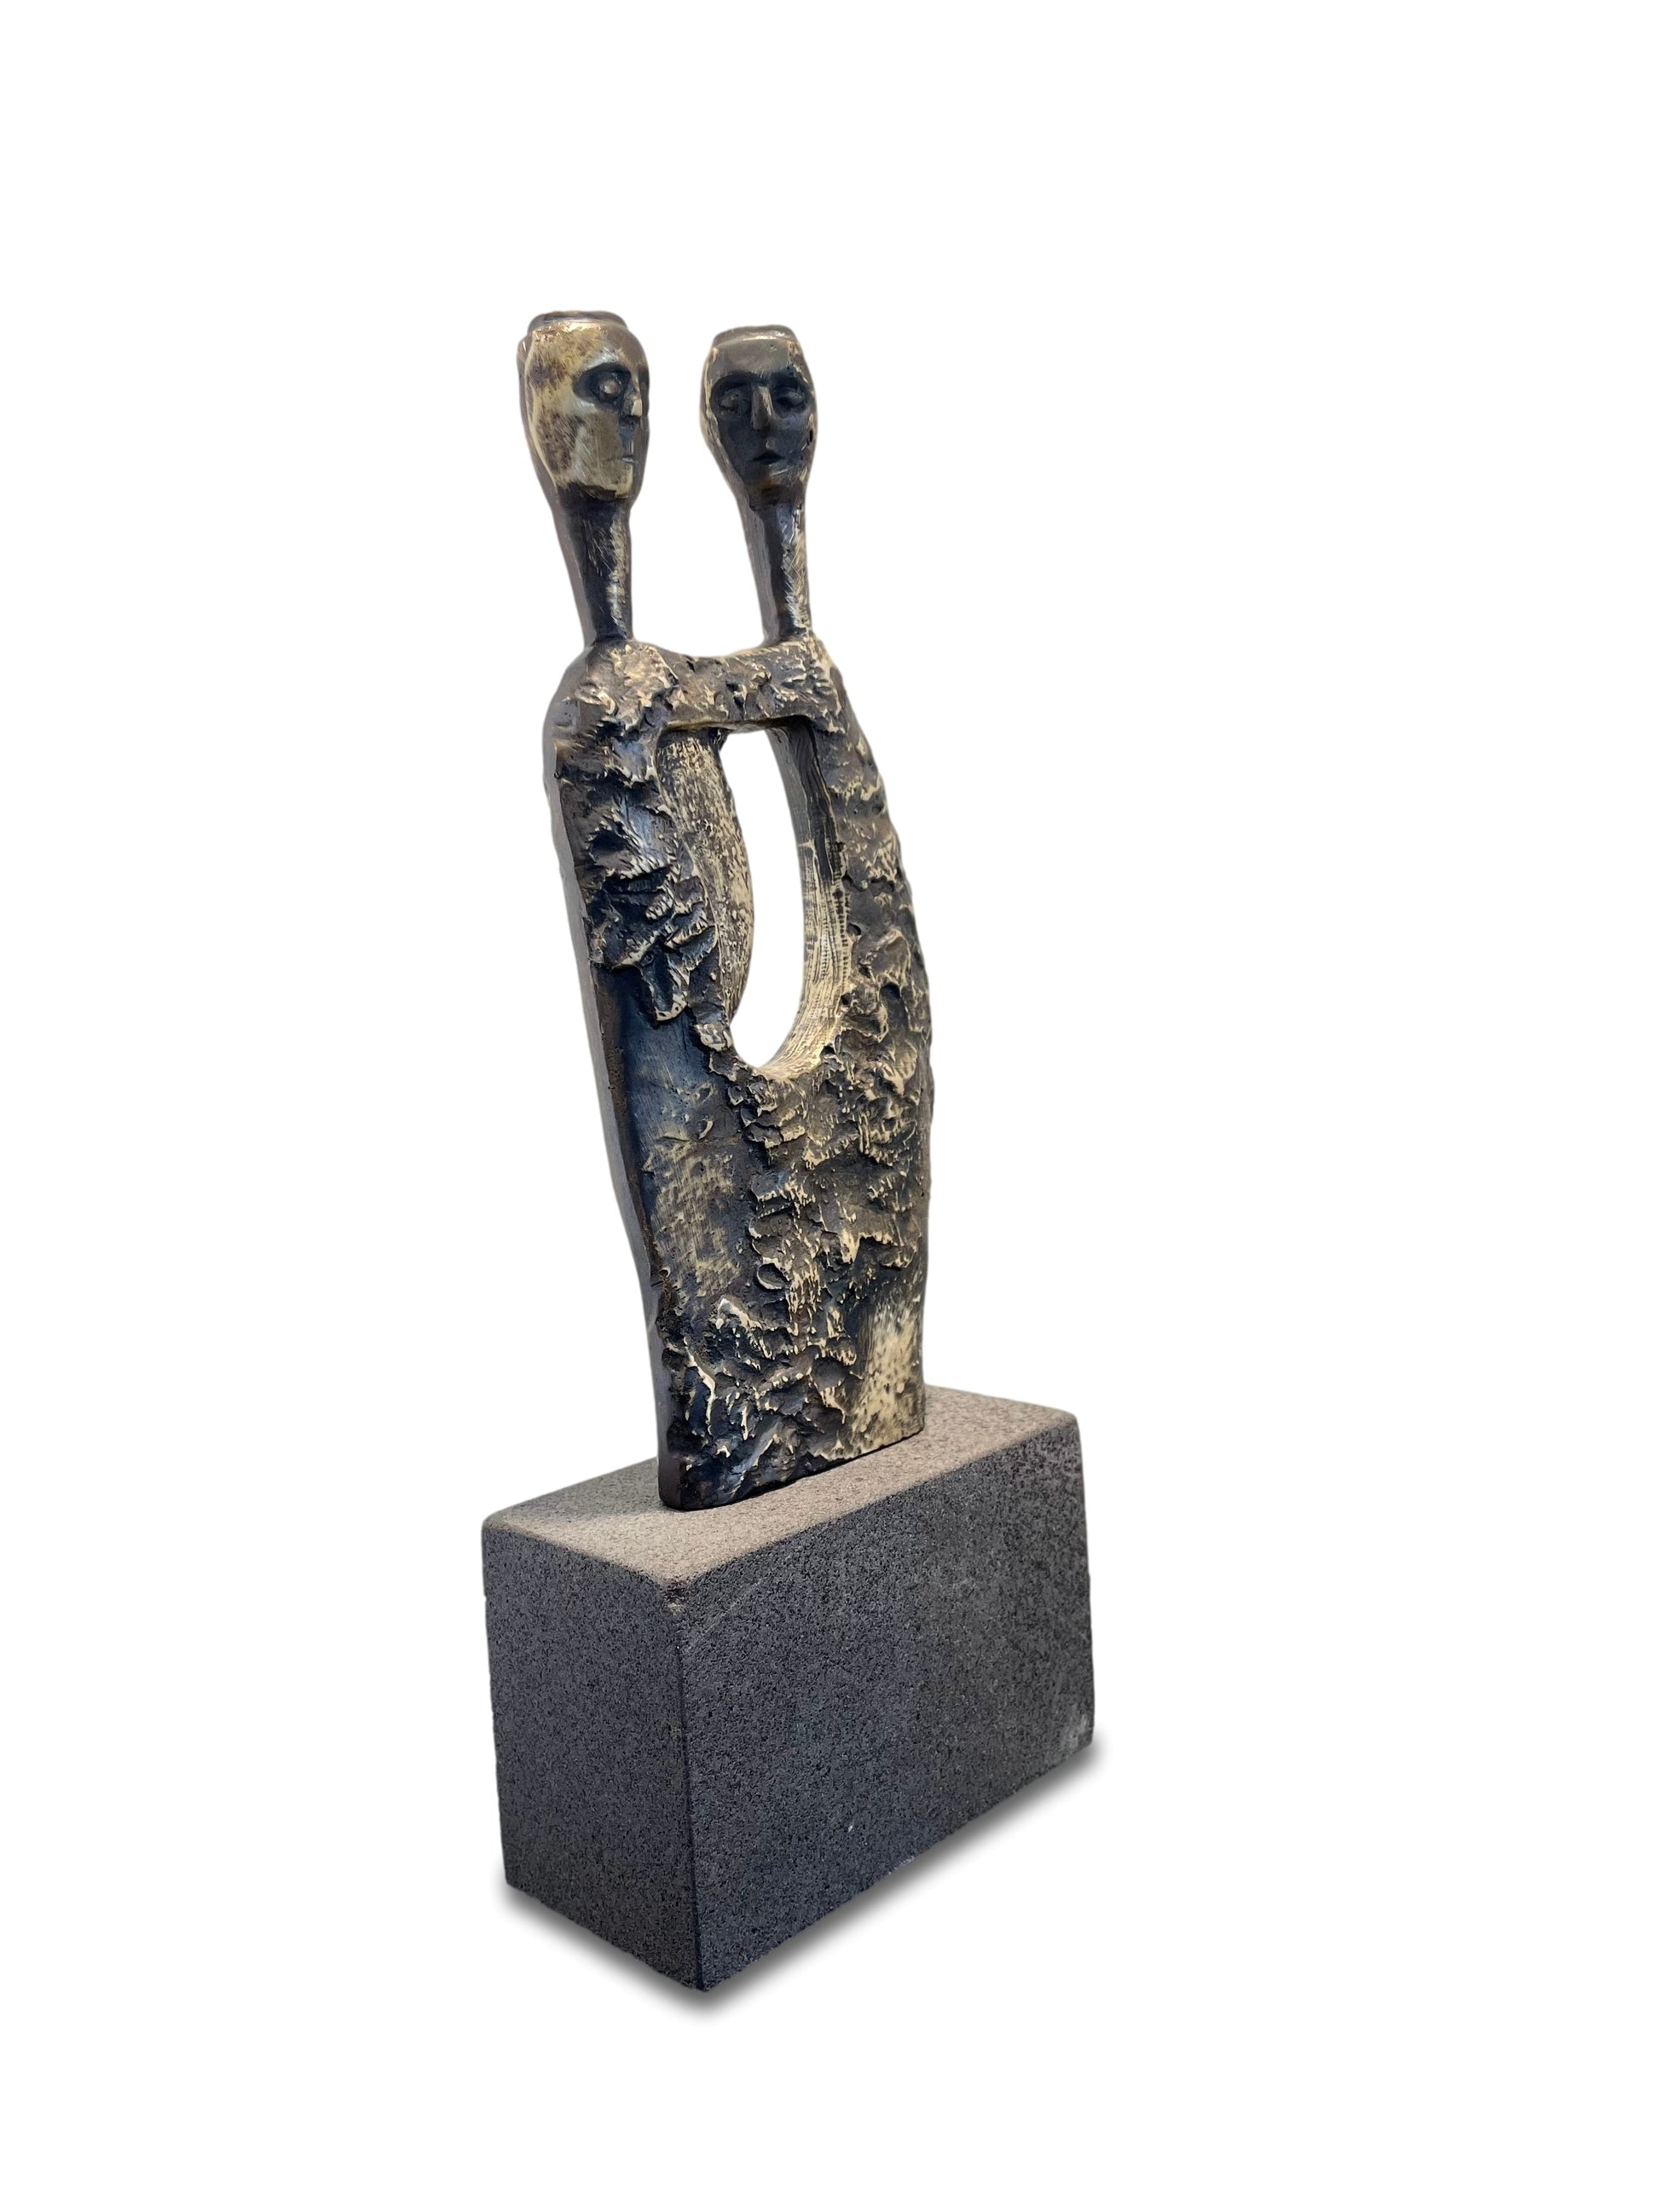 Two Head Bronze Sculpture - 'Ain Ghazal Collection